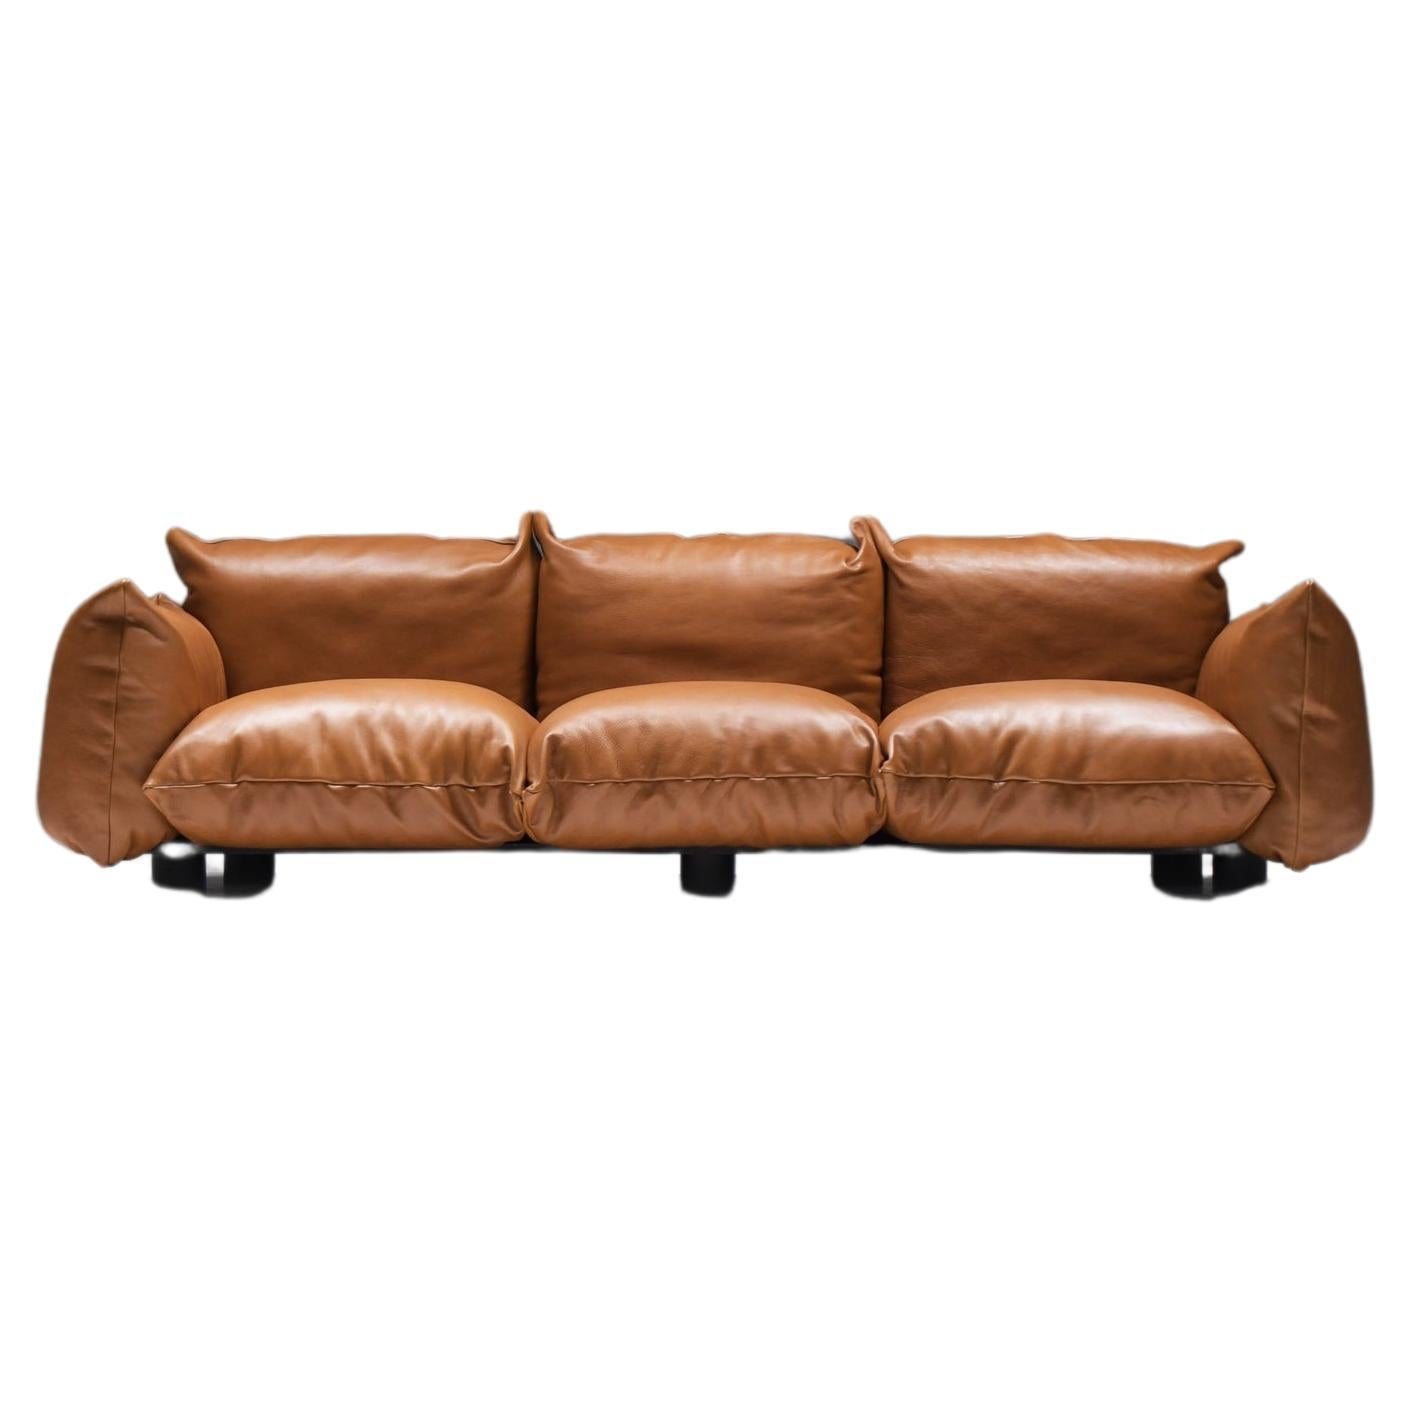 Vintage Marenco 255 sofa in new cognac leather by Mario Marenco for ARFLEX Italy